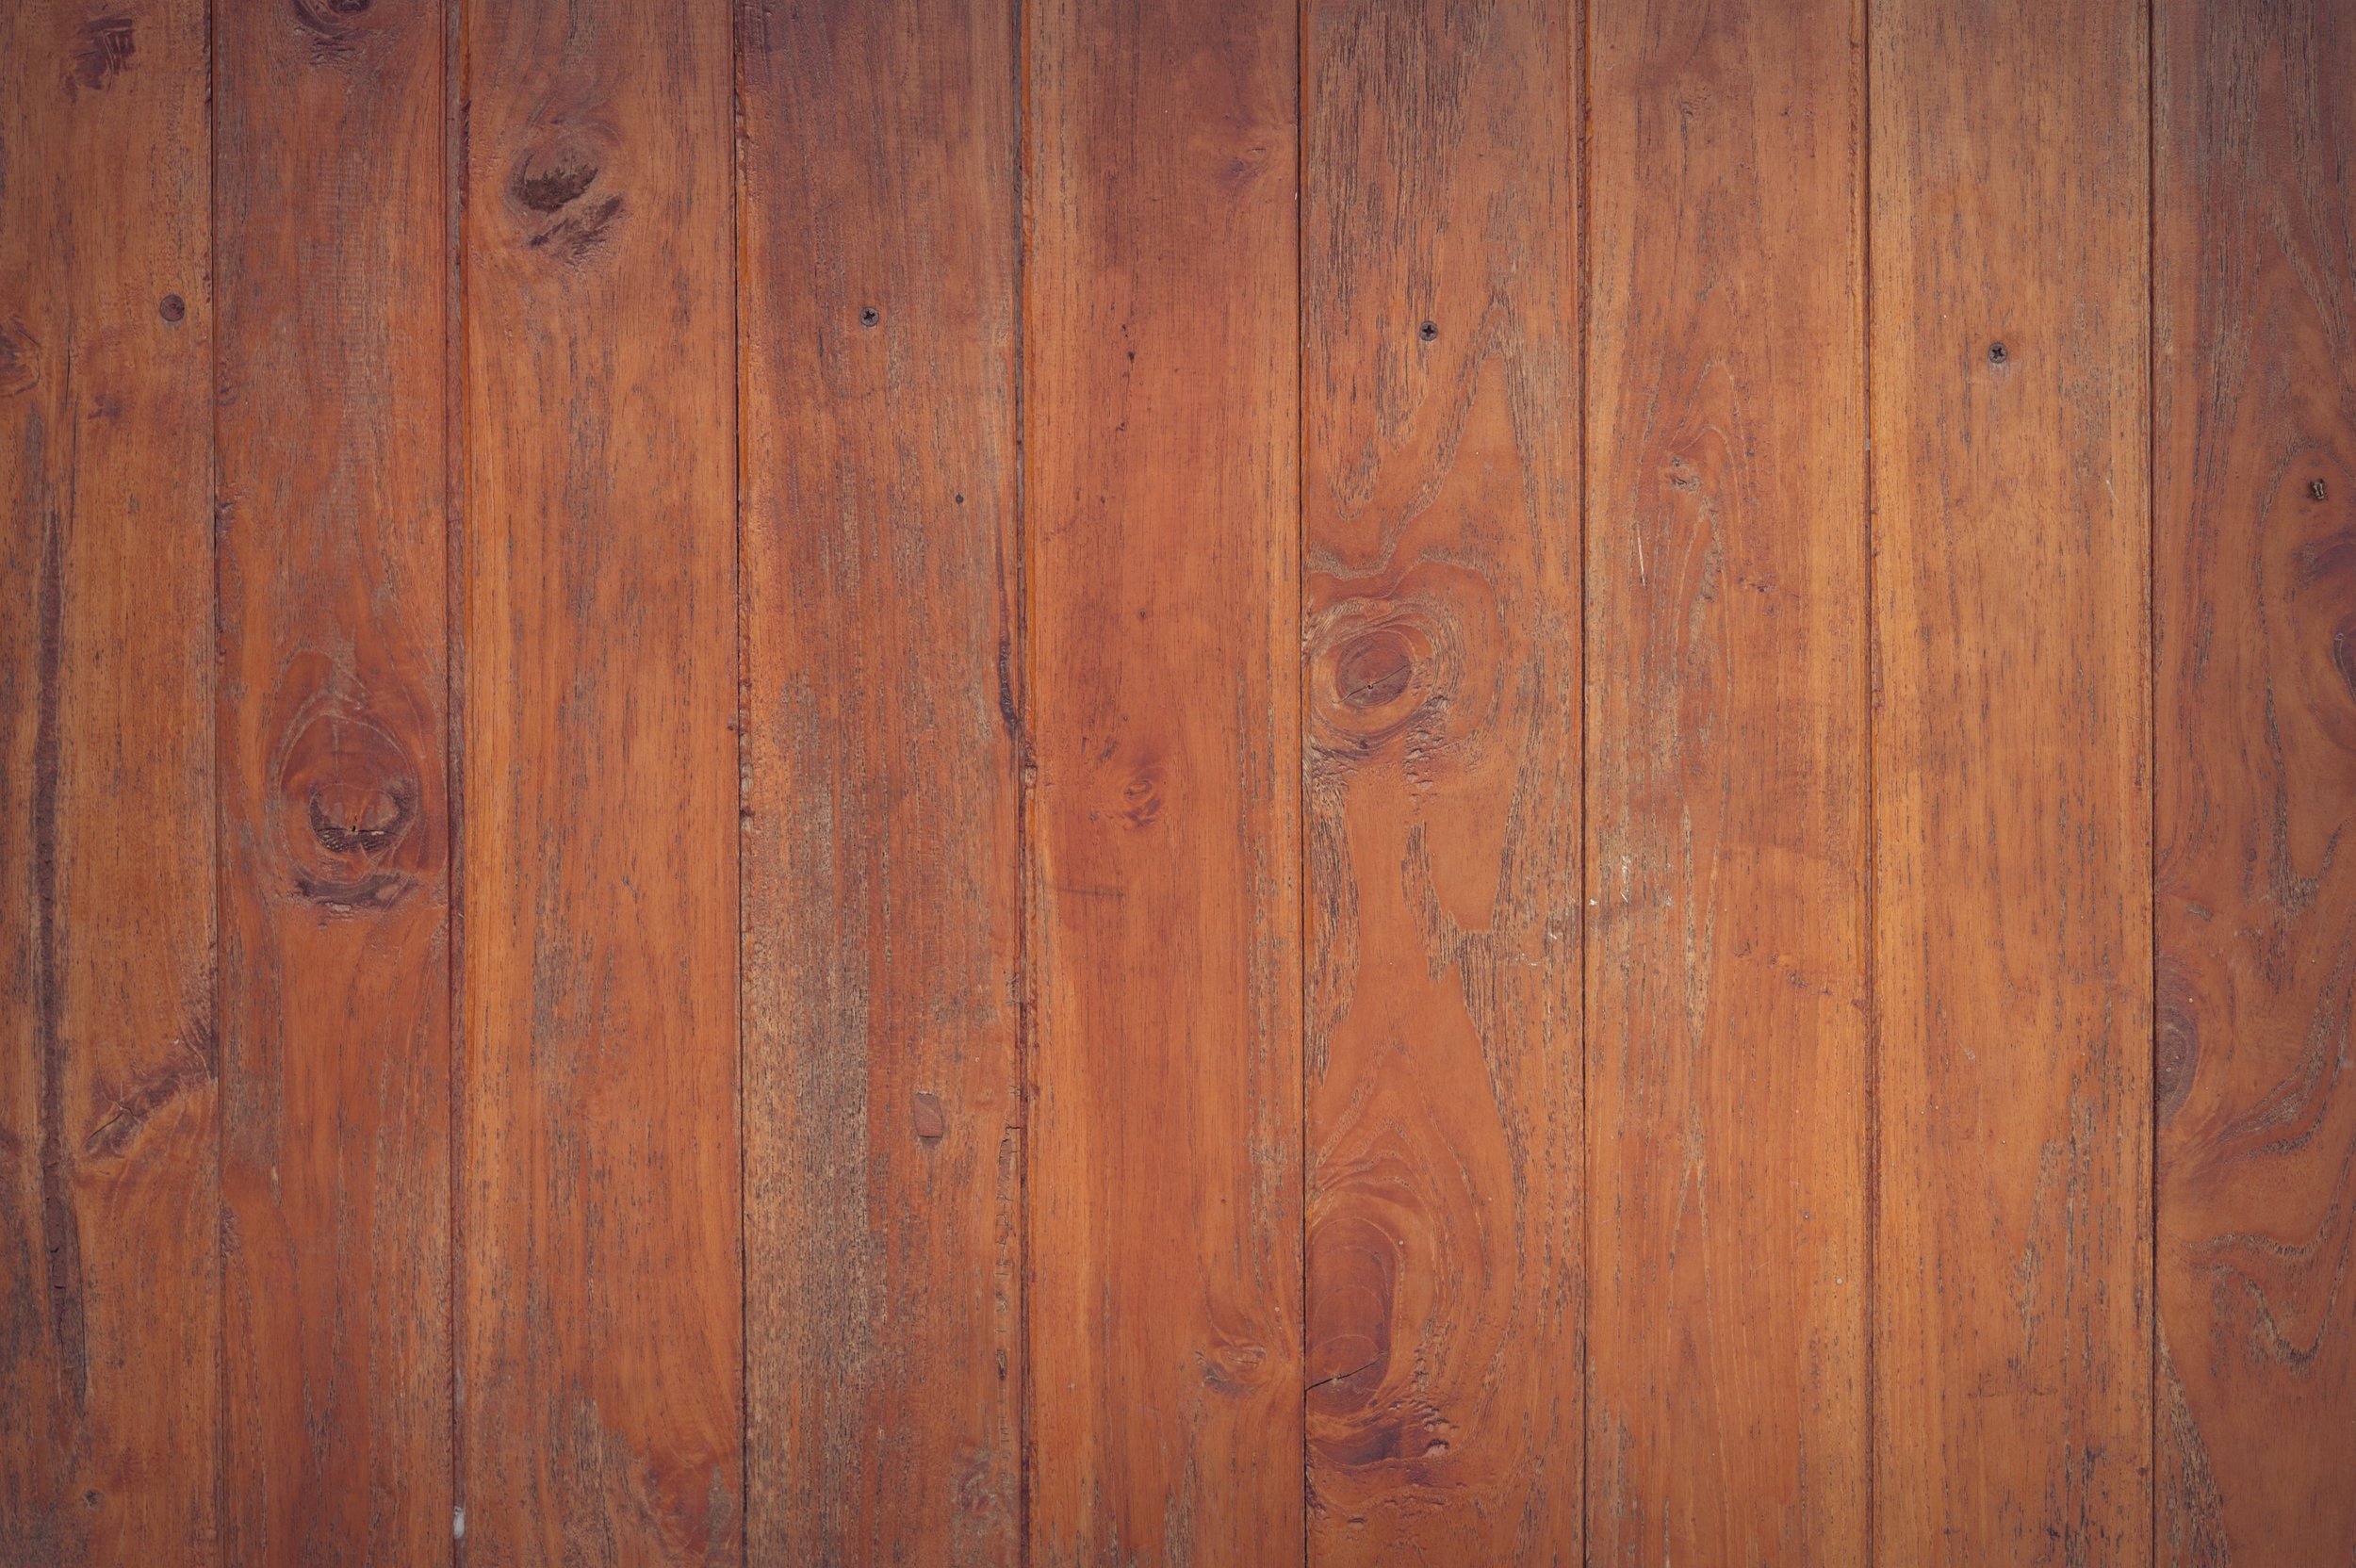 How To Clean Hardwood Floors The, Dull Hardwood Floors